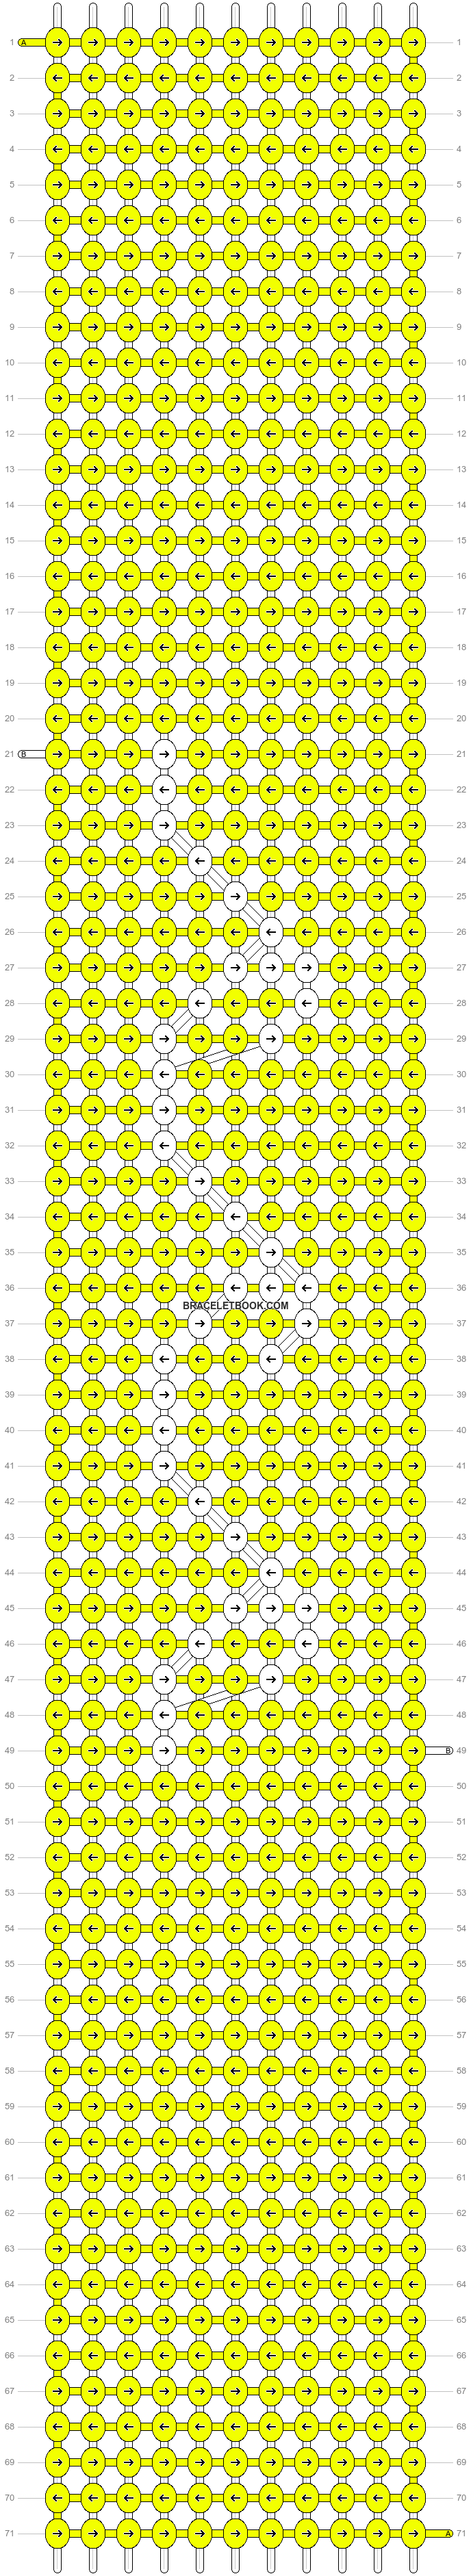 Alpha pattern #38672 variation #73747 pattern